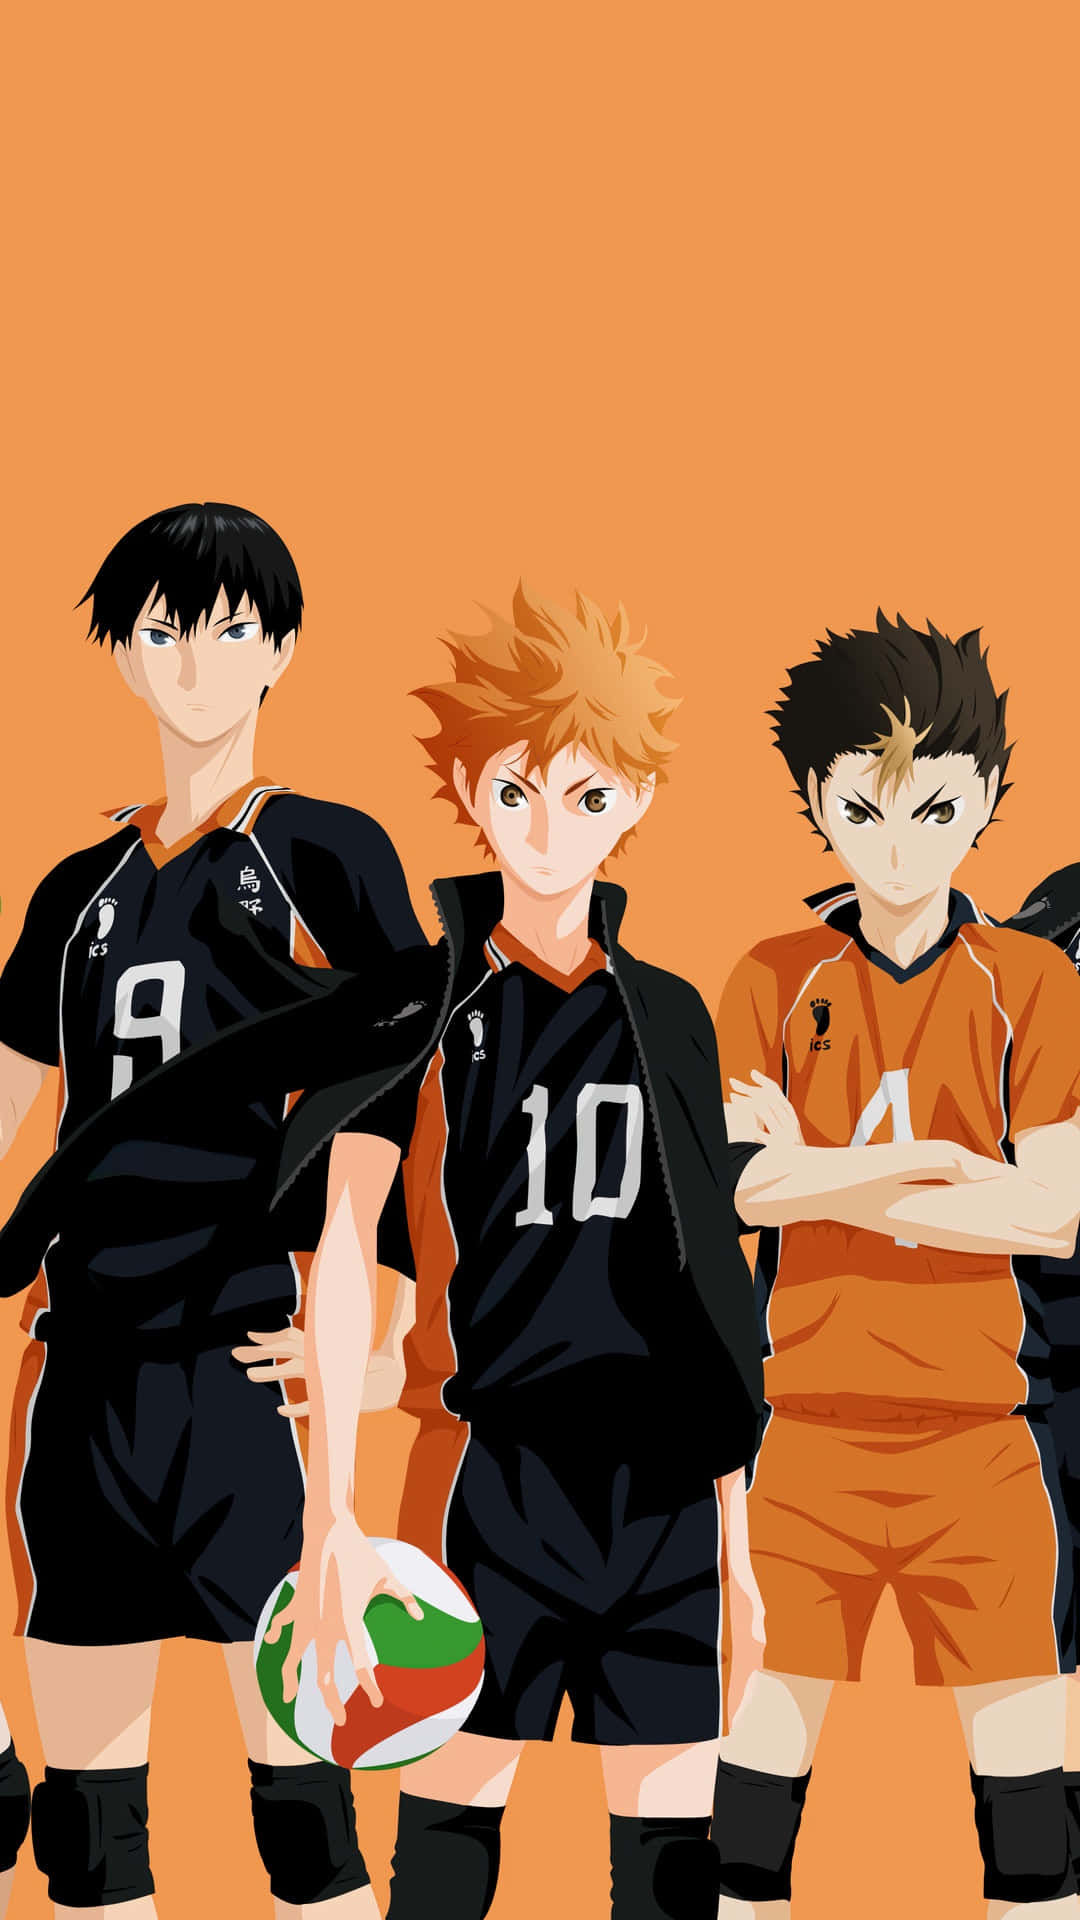 "The Karasuno Volleyball Team soars to success!" Wallpaper